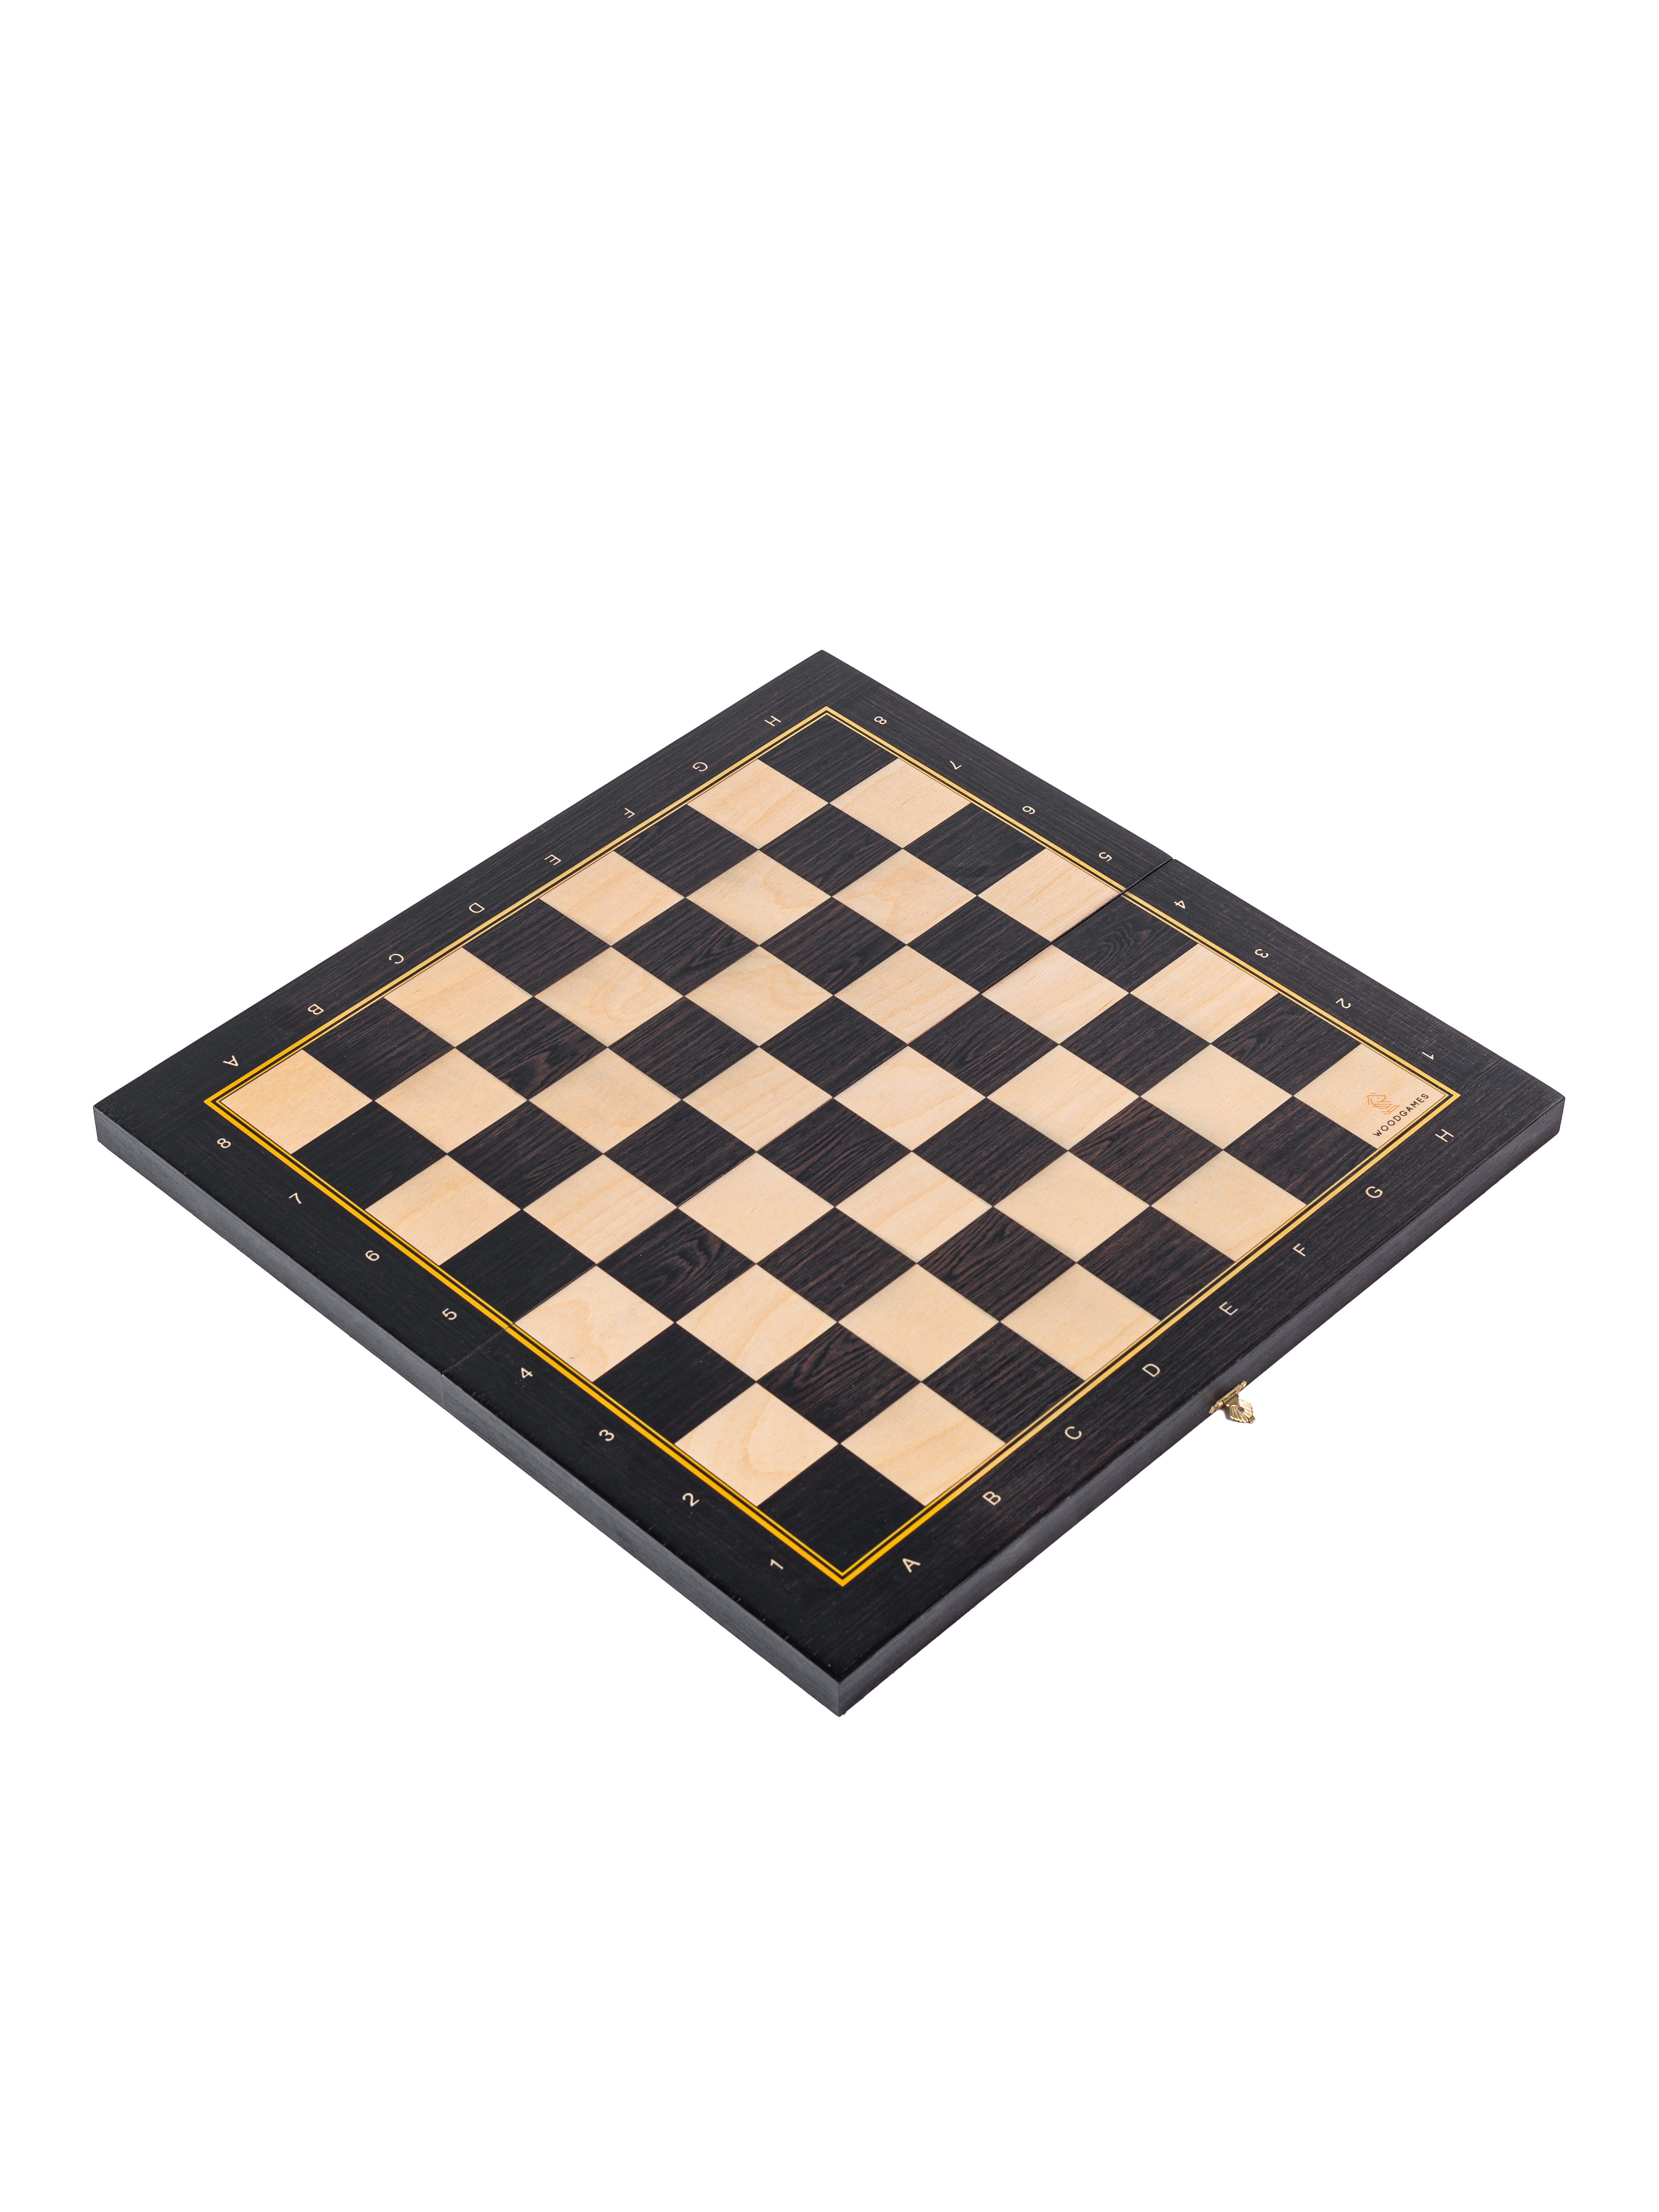 Шахматная доска Lavochkashop Авангард венге большая без фигур великая шахматная доска